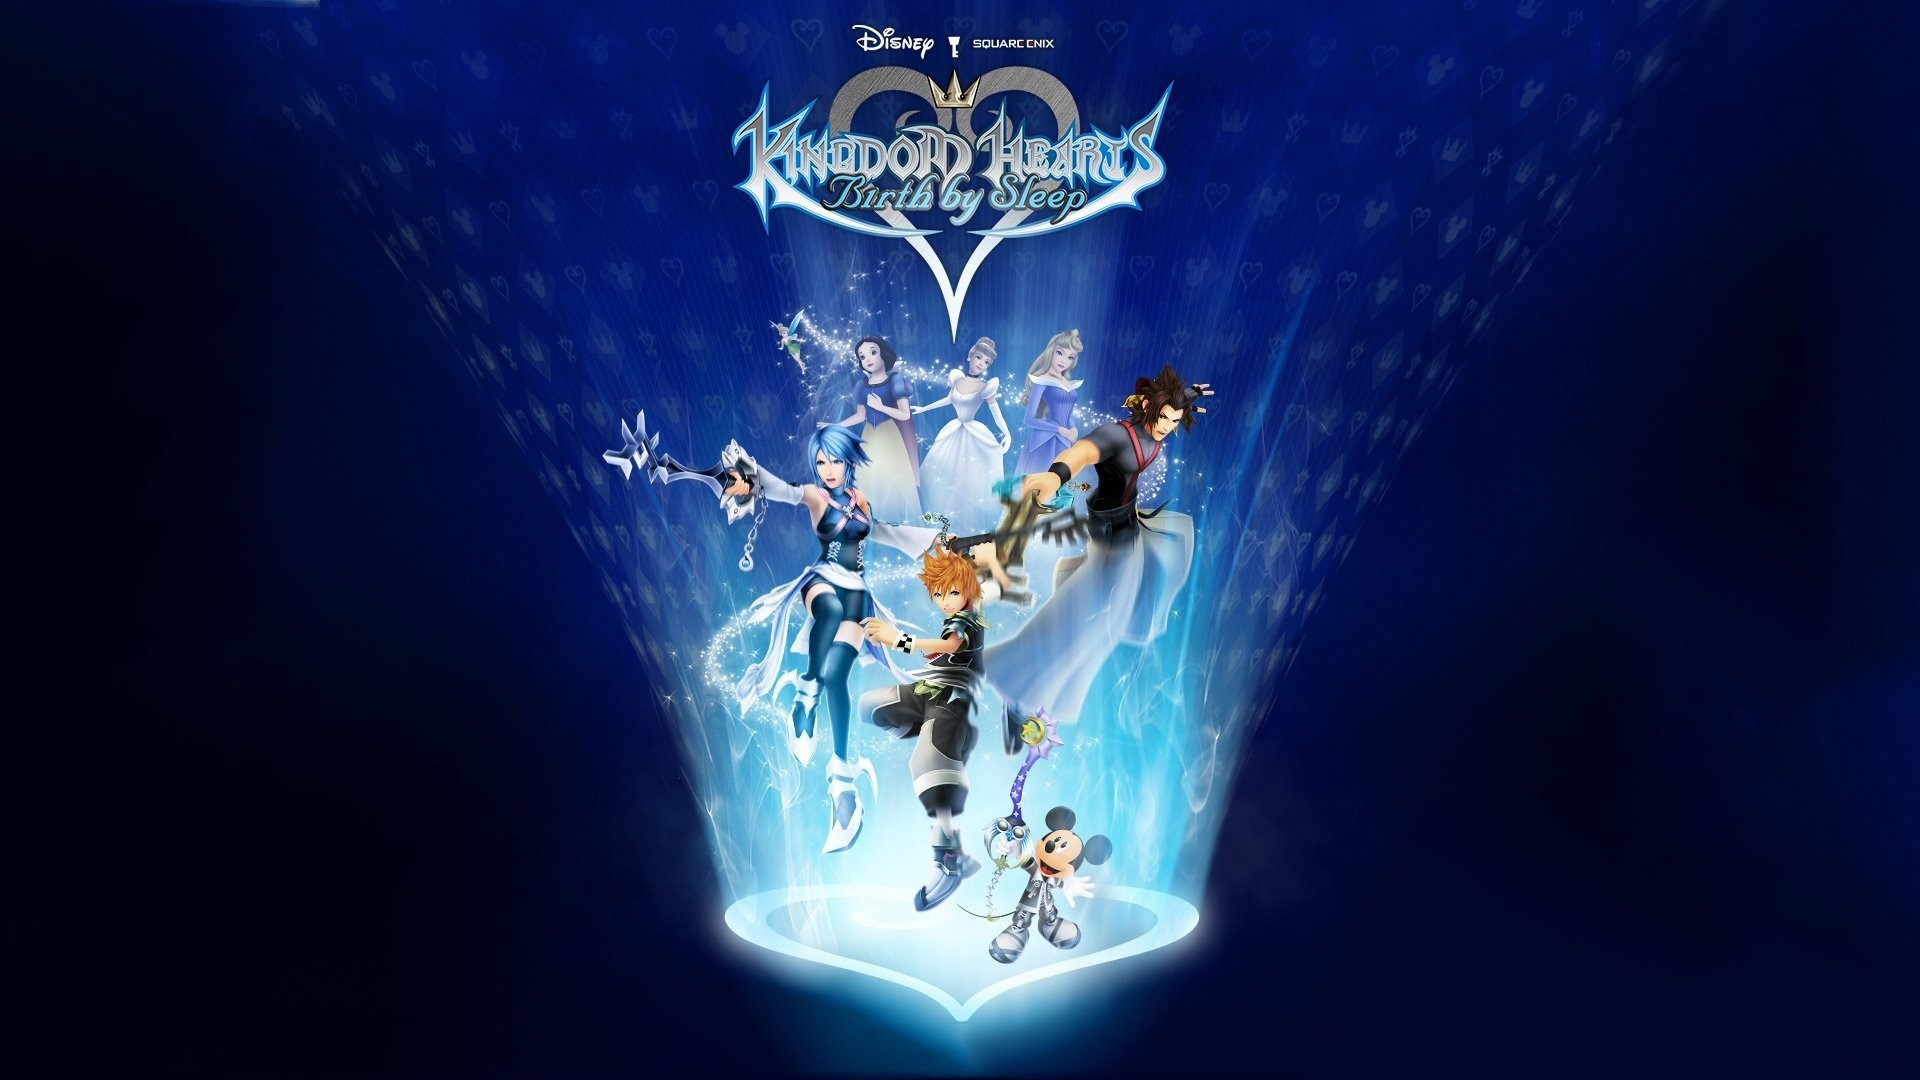 1920x1080 Kingdom Hearts Birth by Sleep Wallpaper Hd Lovely Kh Aqua Wallpaper 81  Images Of Kingdom Hearts